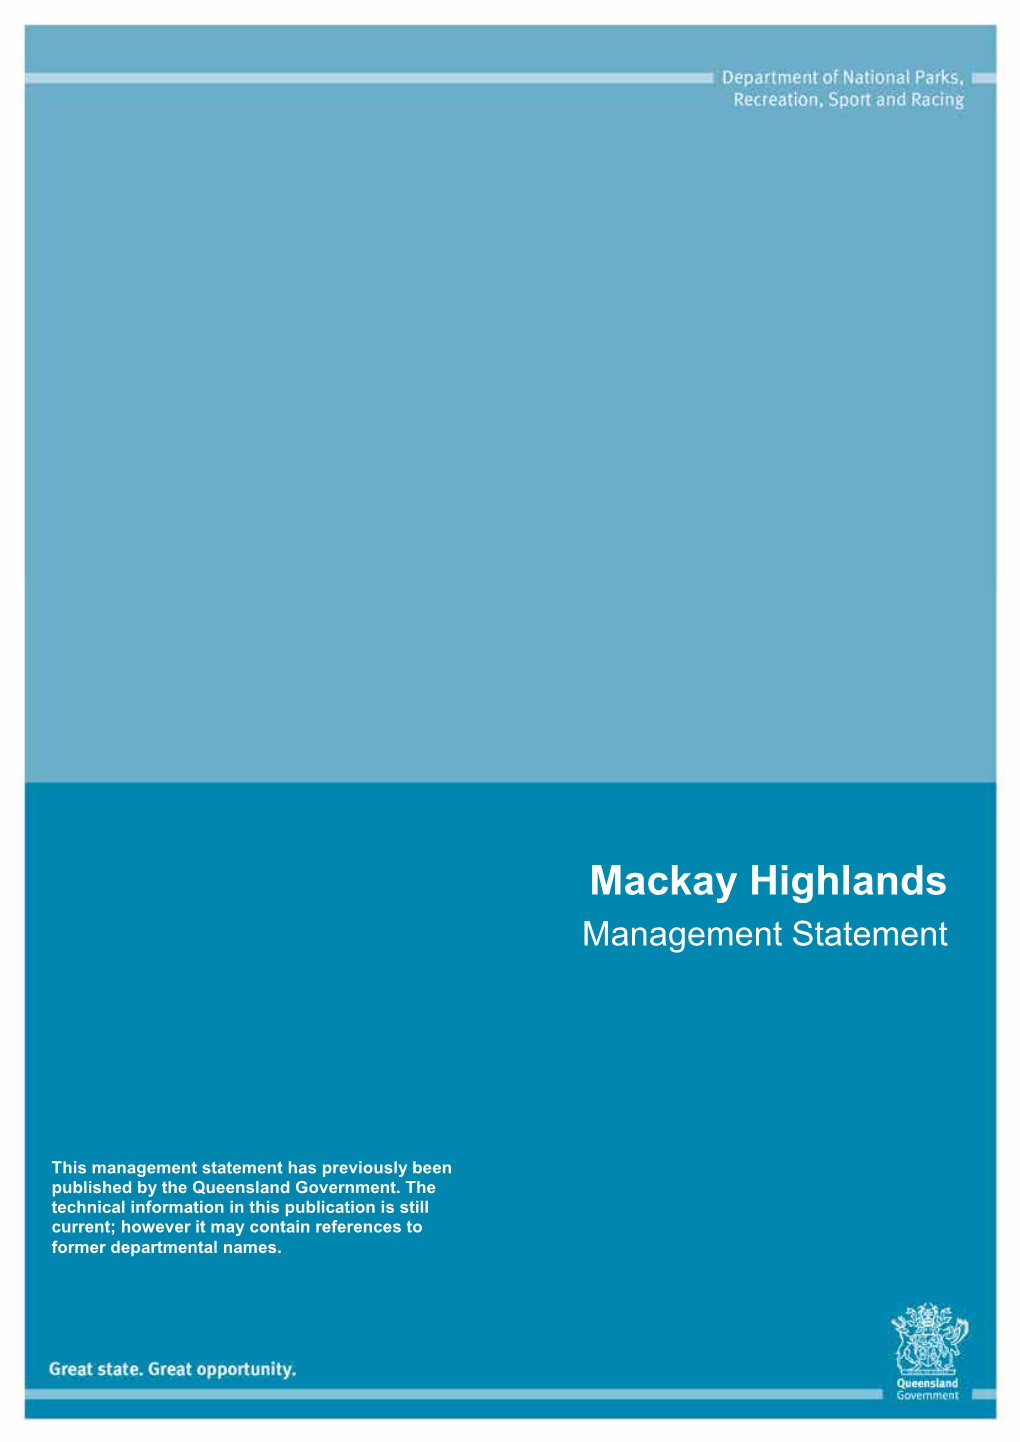 Mackay Highlands Management Statement